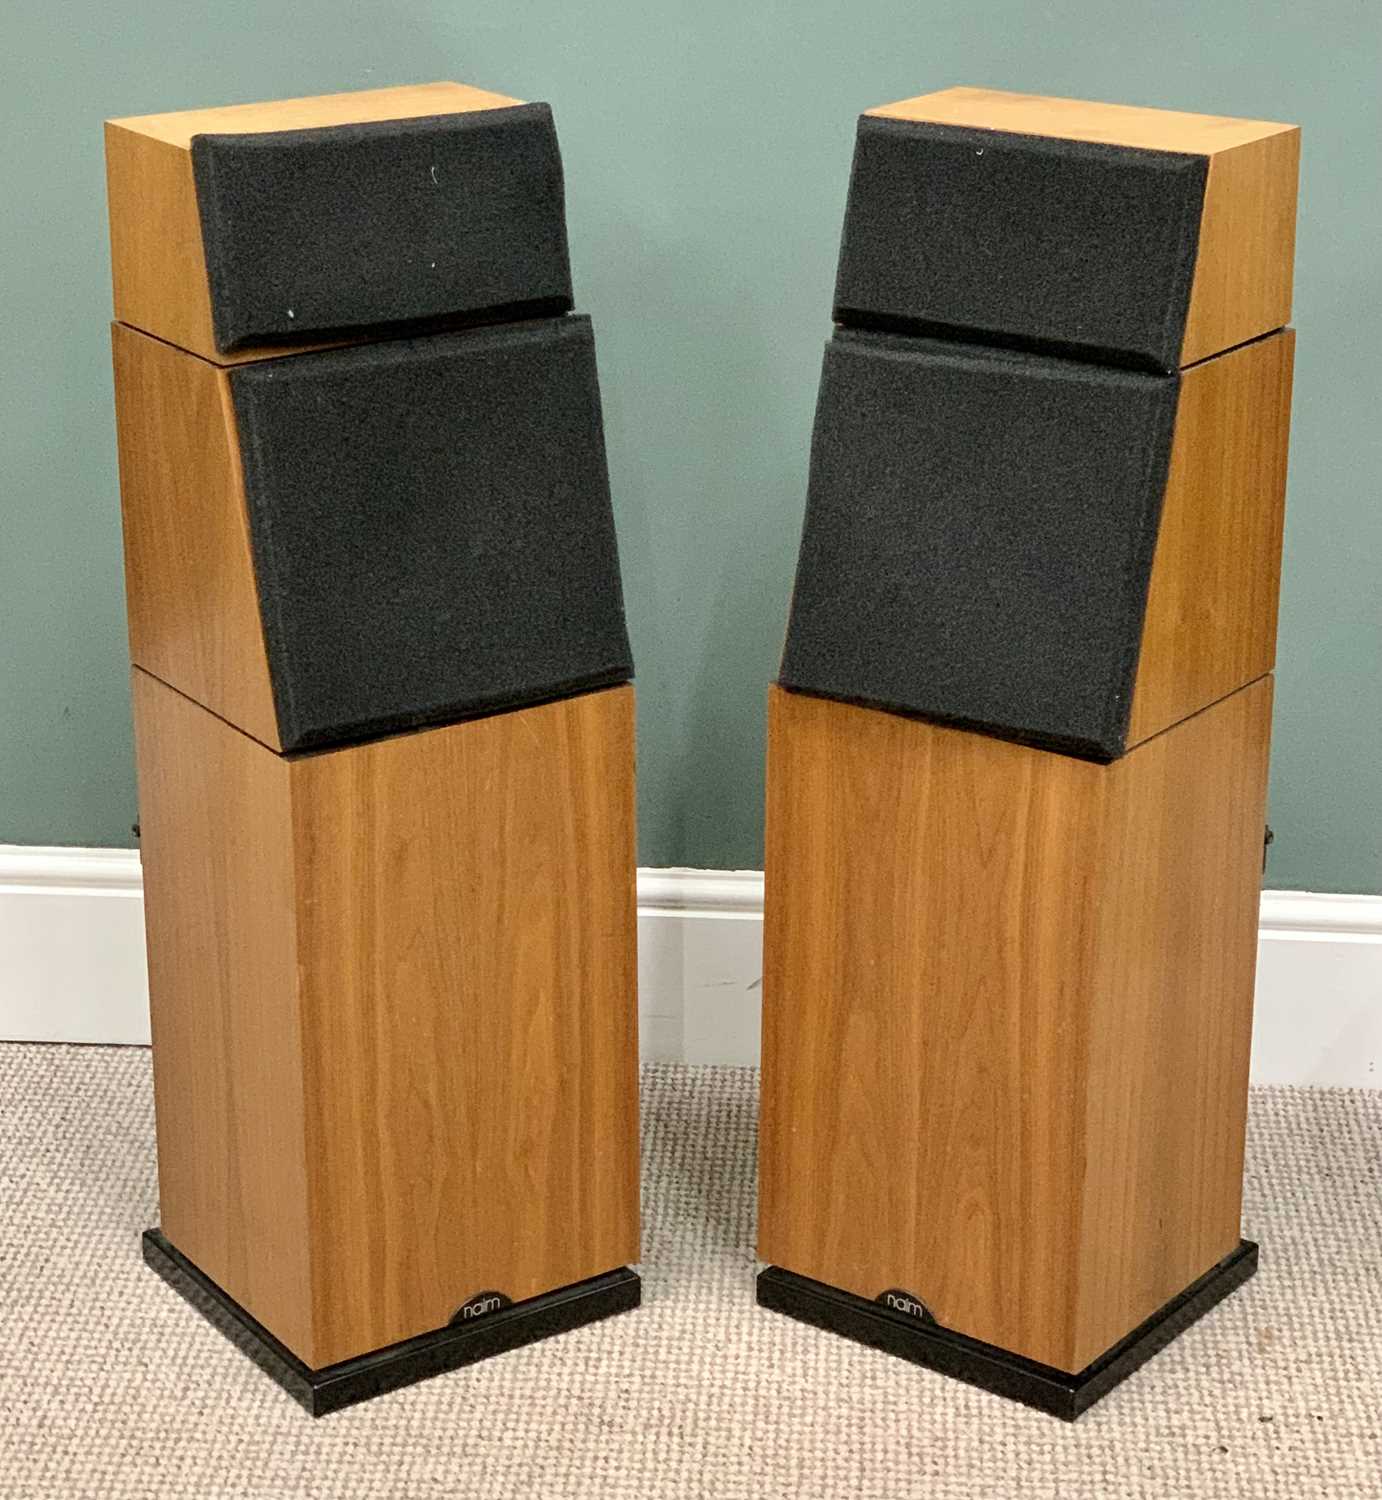 HI-FI EQUIPMENT - NAIM AUDIO LTD 2 x SBL floorstanding speakers with top speaker recline, 87cms H - Image 2 of 5